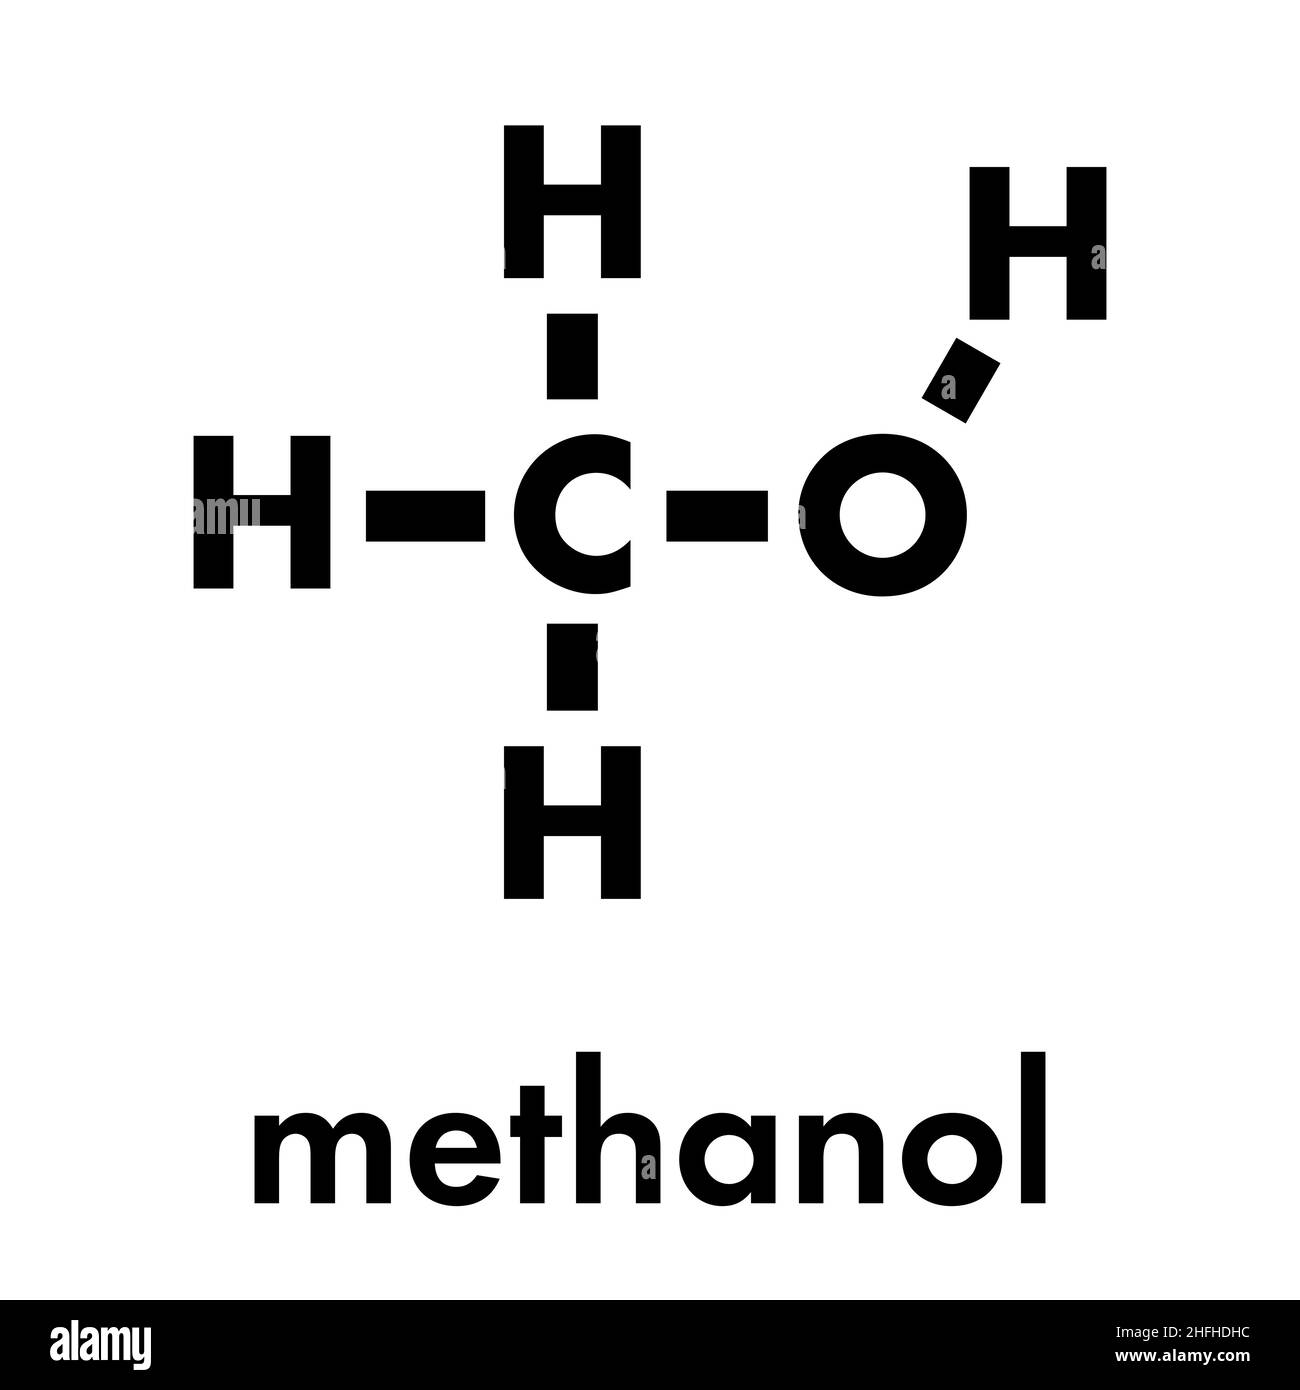 Задачи метанол